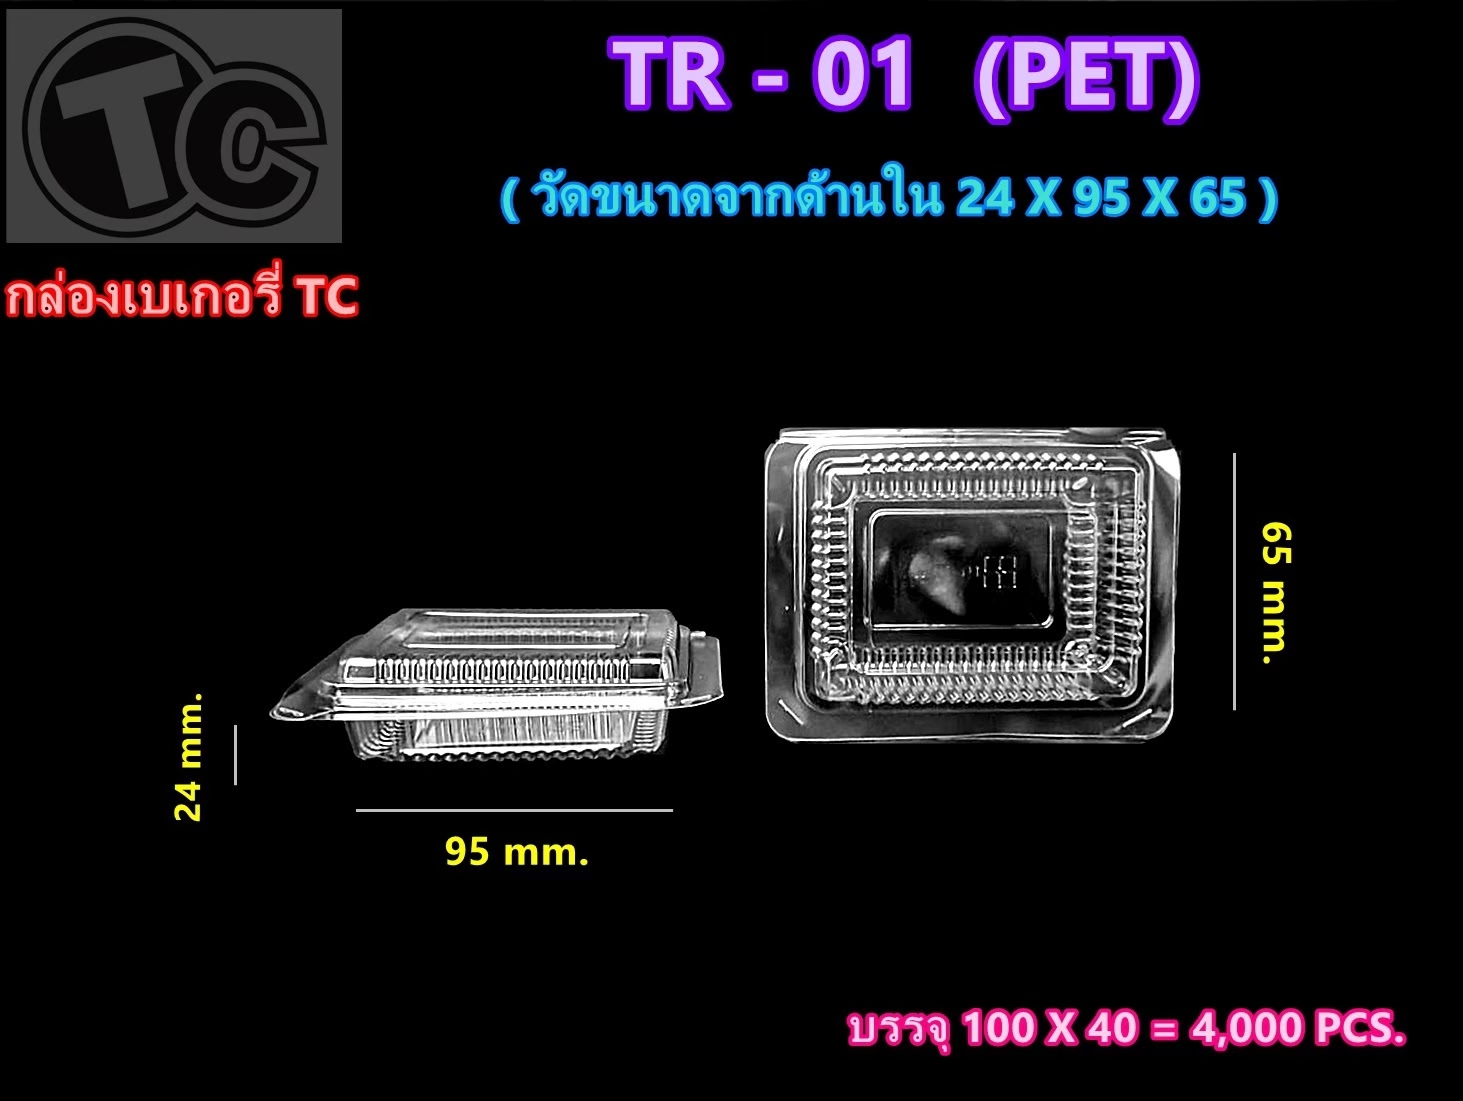 TR-01 PET กล่องเค้กพลาสติกTR-01 กล่องพลาสติกใส กล่องใส กล่องขนม ใส่ของว่าง